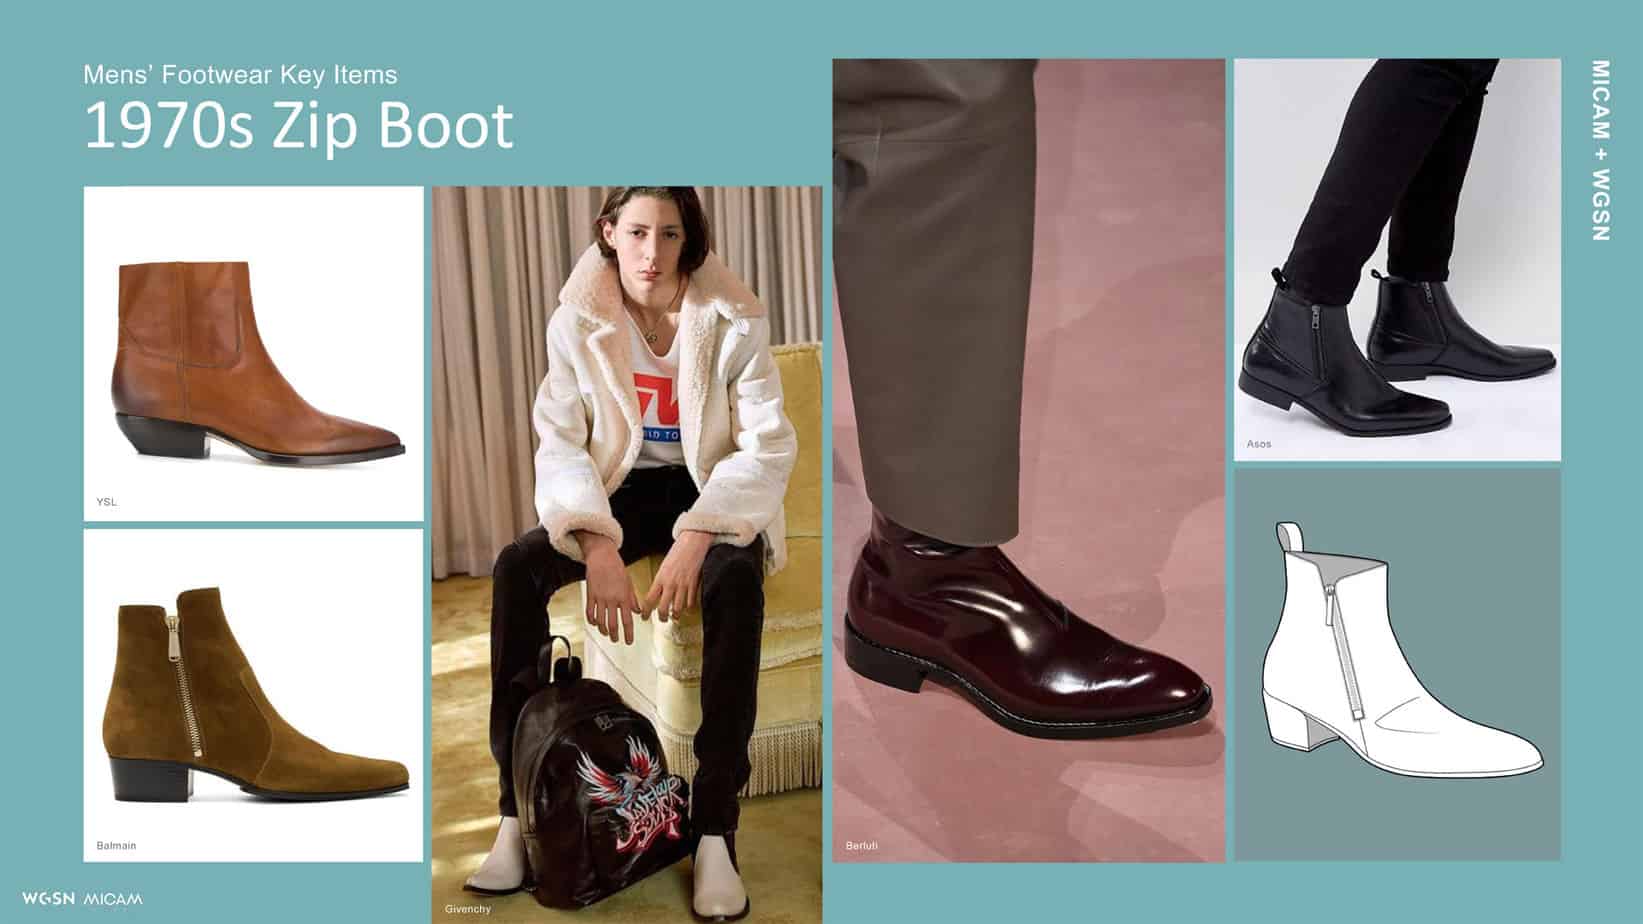 Mens’ Footwear Key Items 1970s Zip Boot